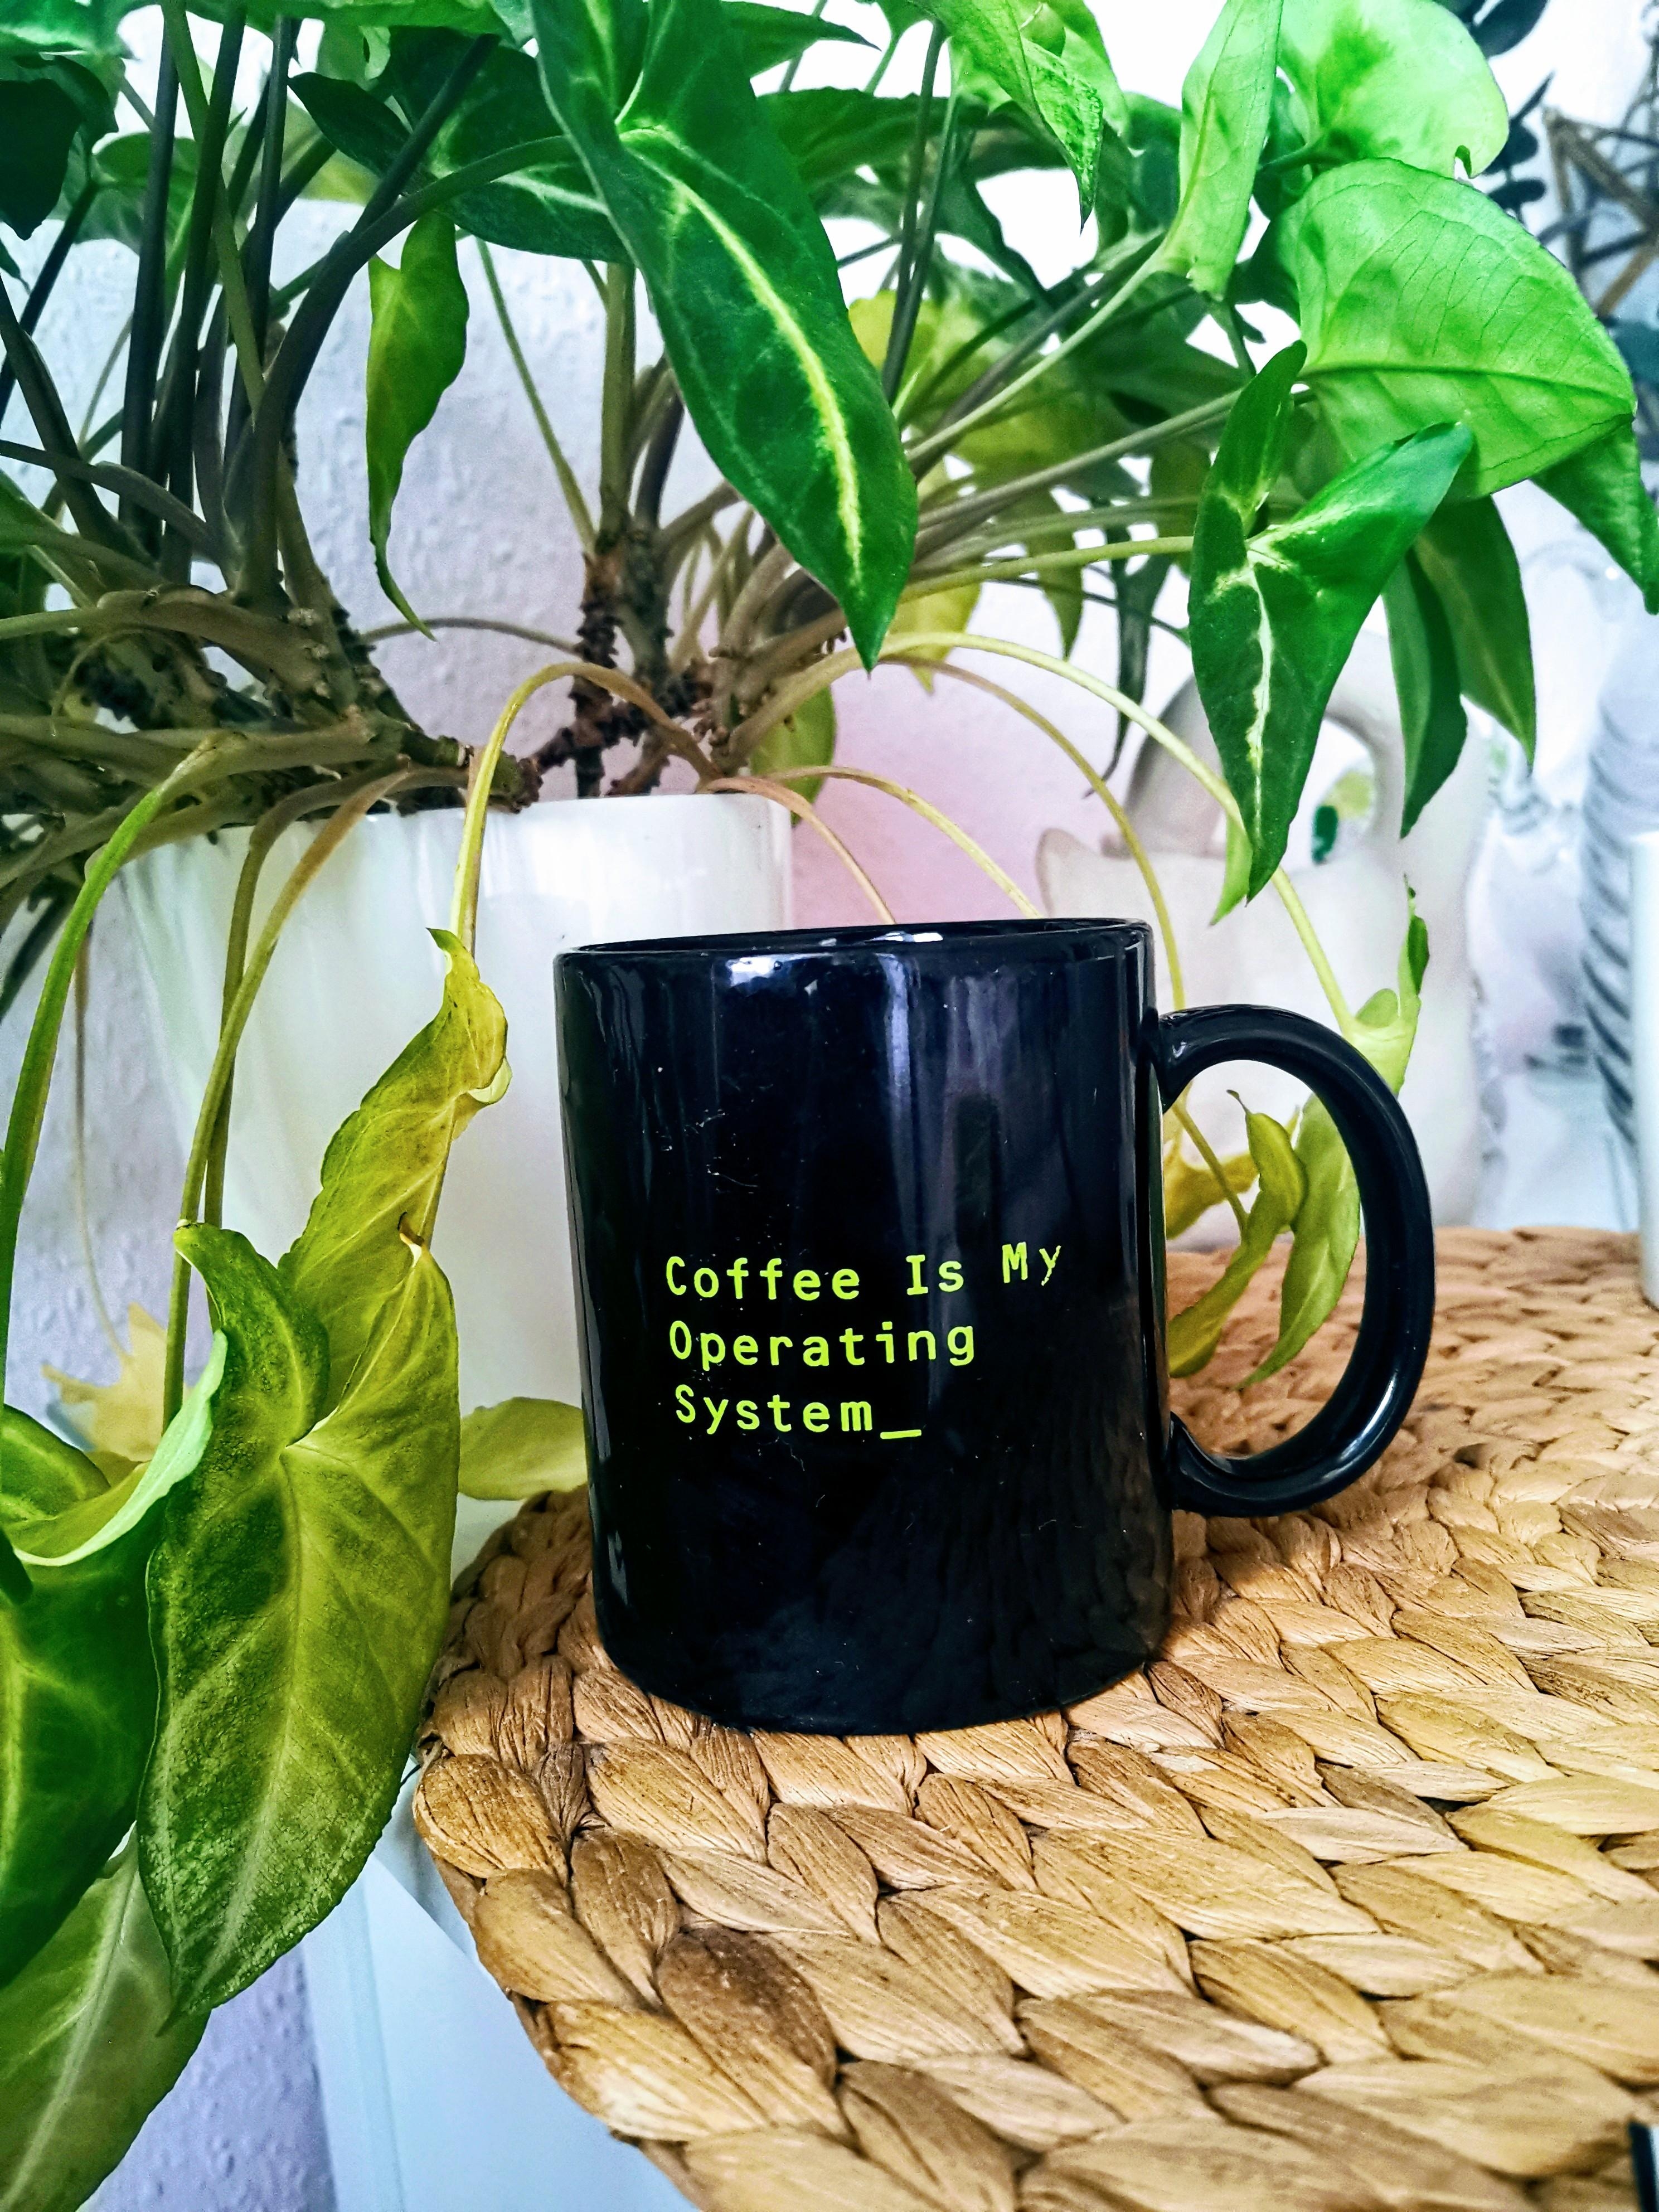 Egal ob #homeoffice oder im Büro mit den Kollegen. Der Satz stimmt immer.
#kaffee #kaffeeliebe #pflanzen